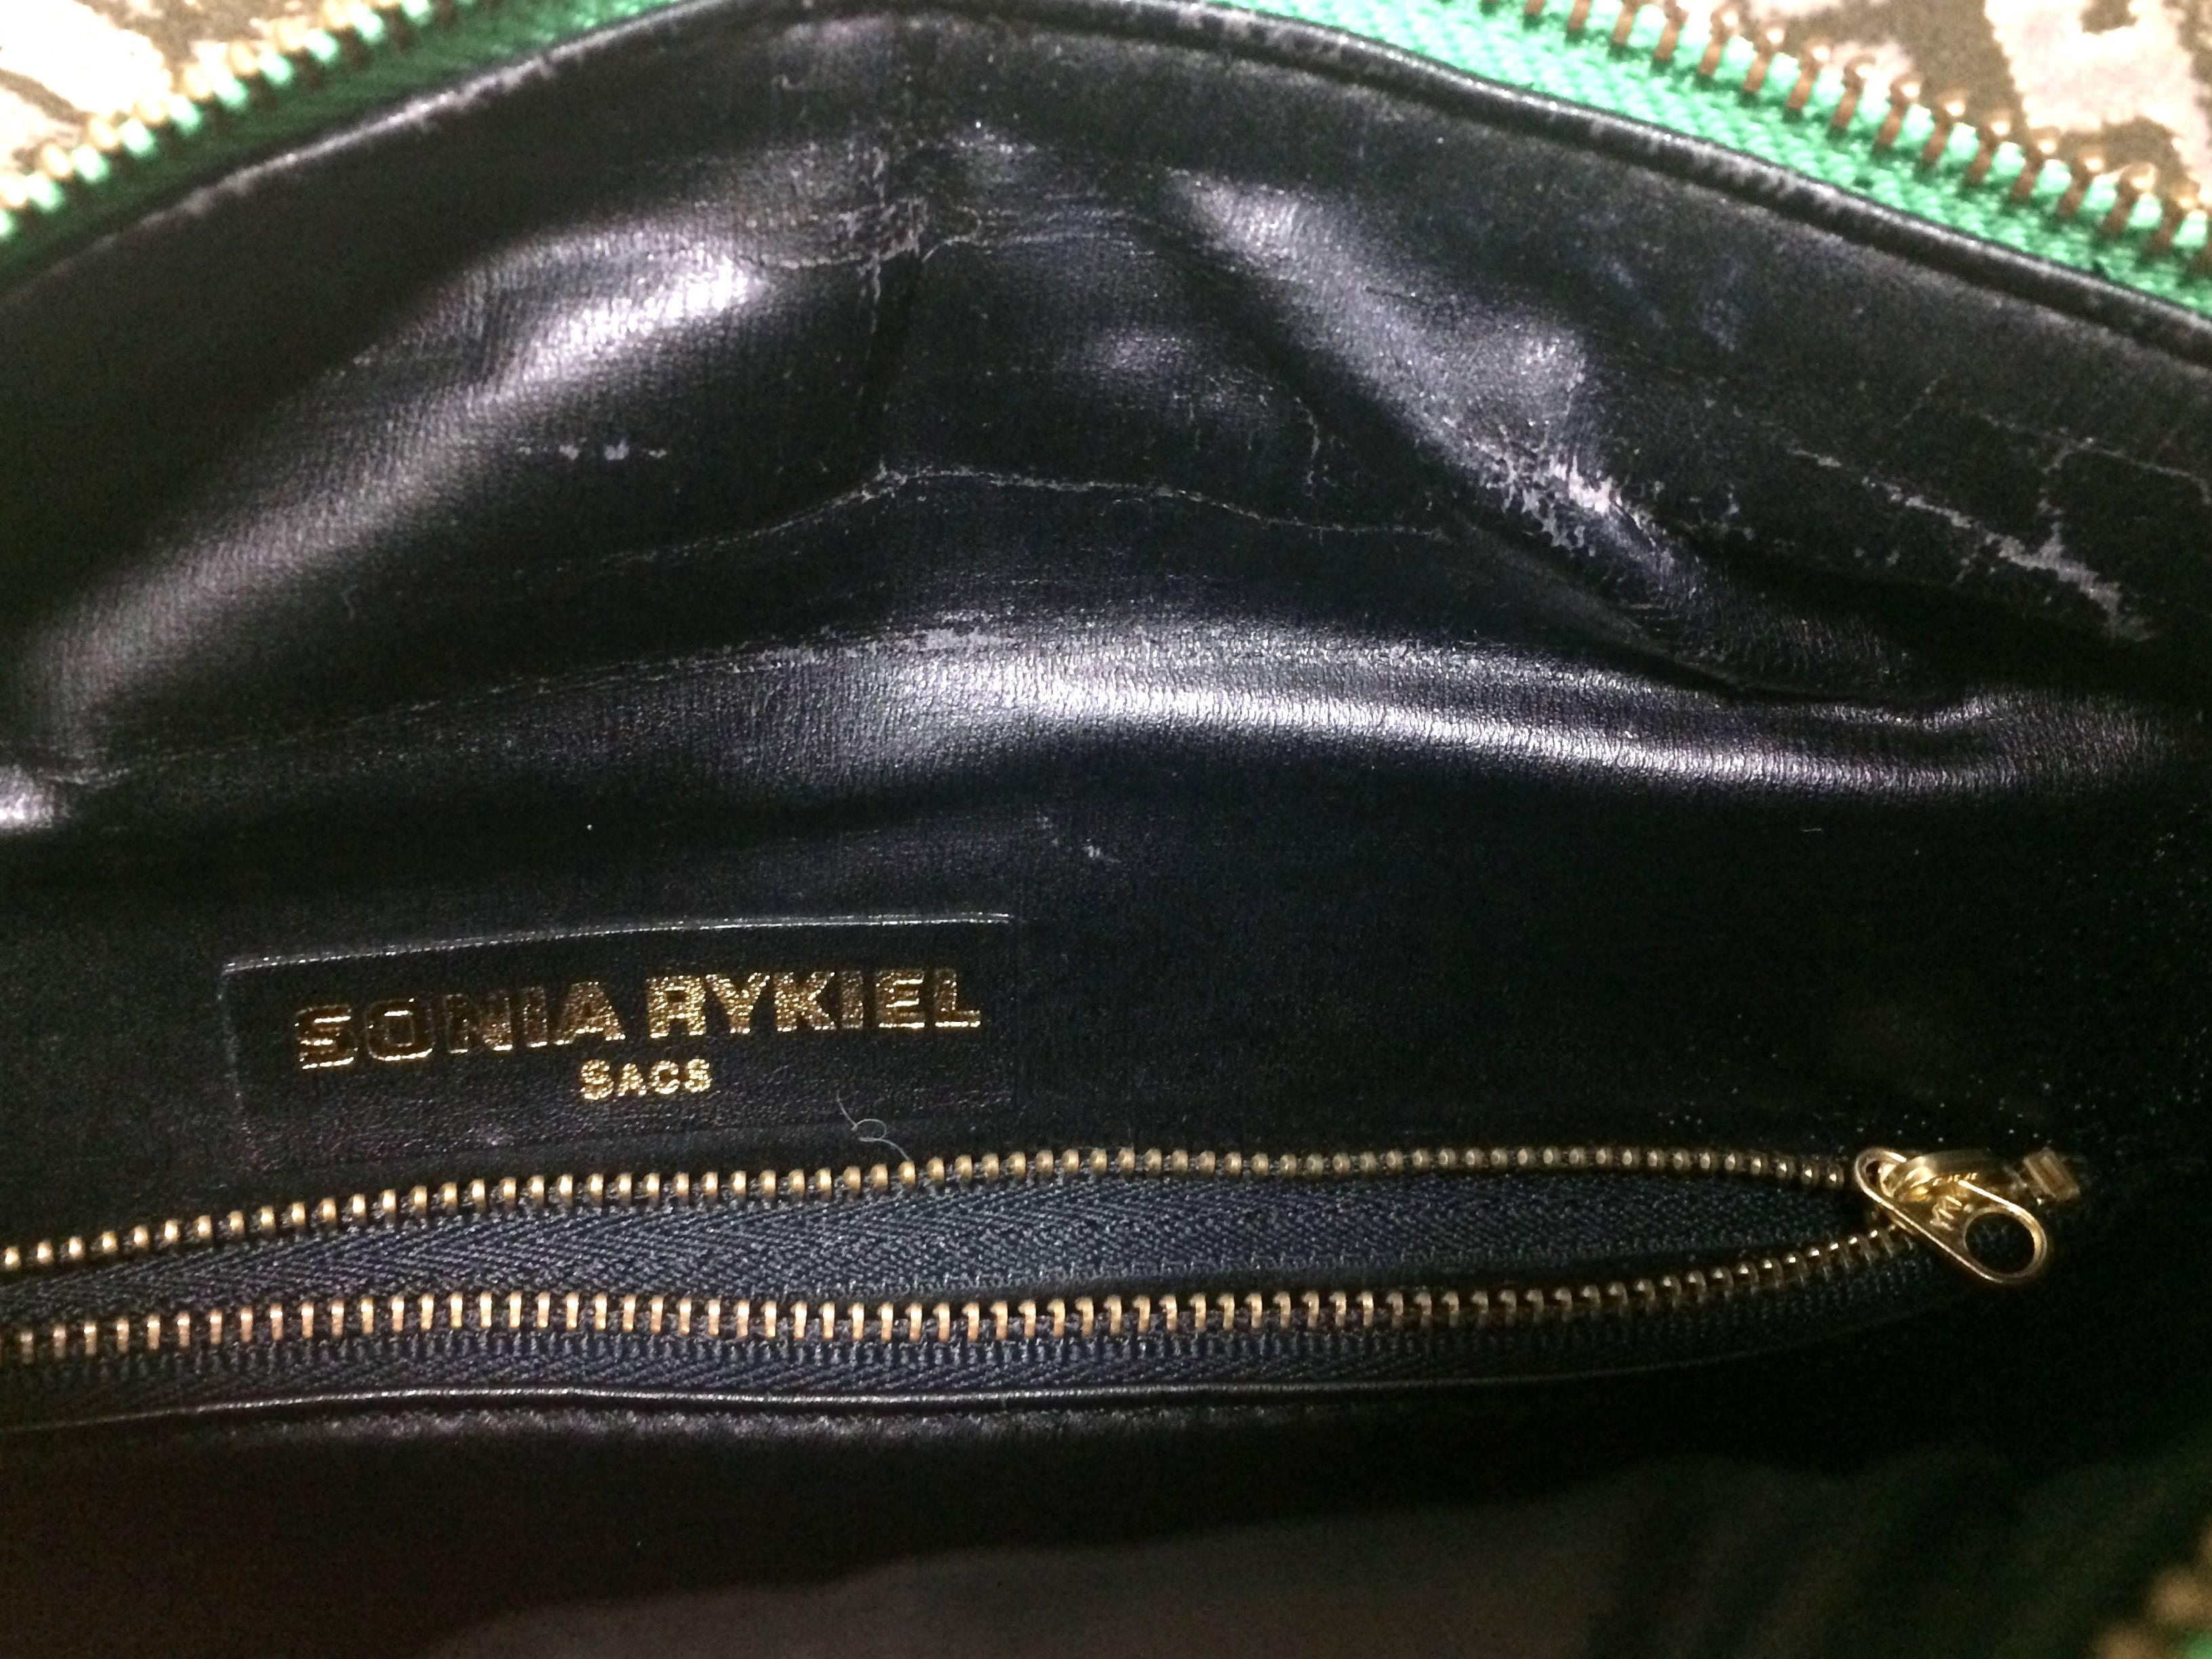 Vintage SONIA RYKIEL green leather handbag purse in speedy bag style with chains 2